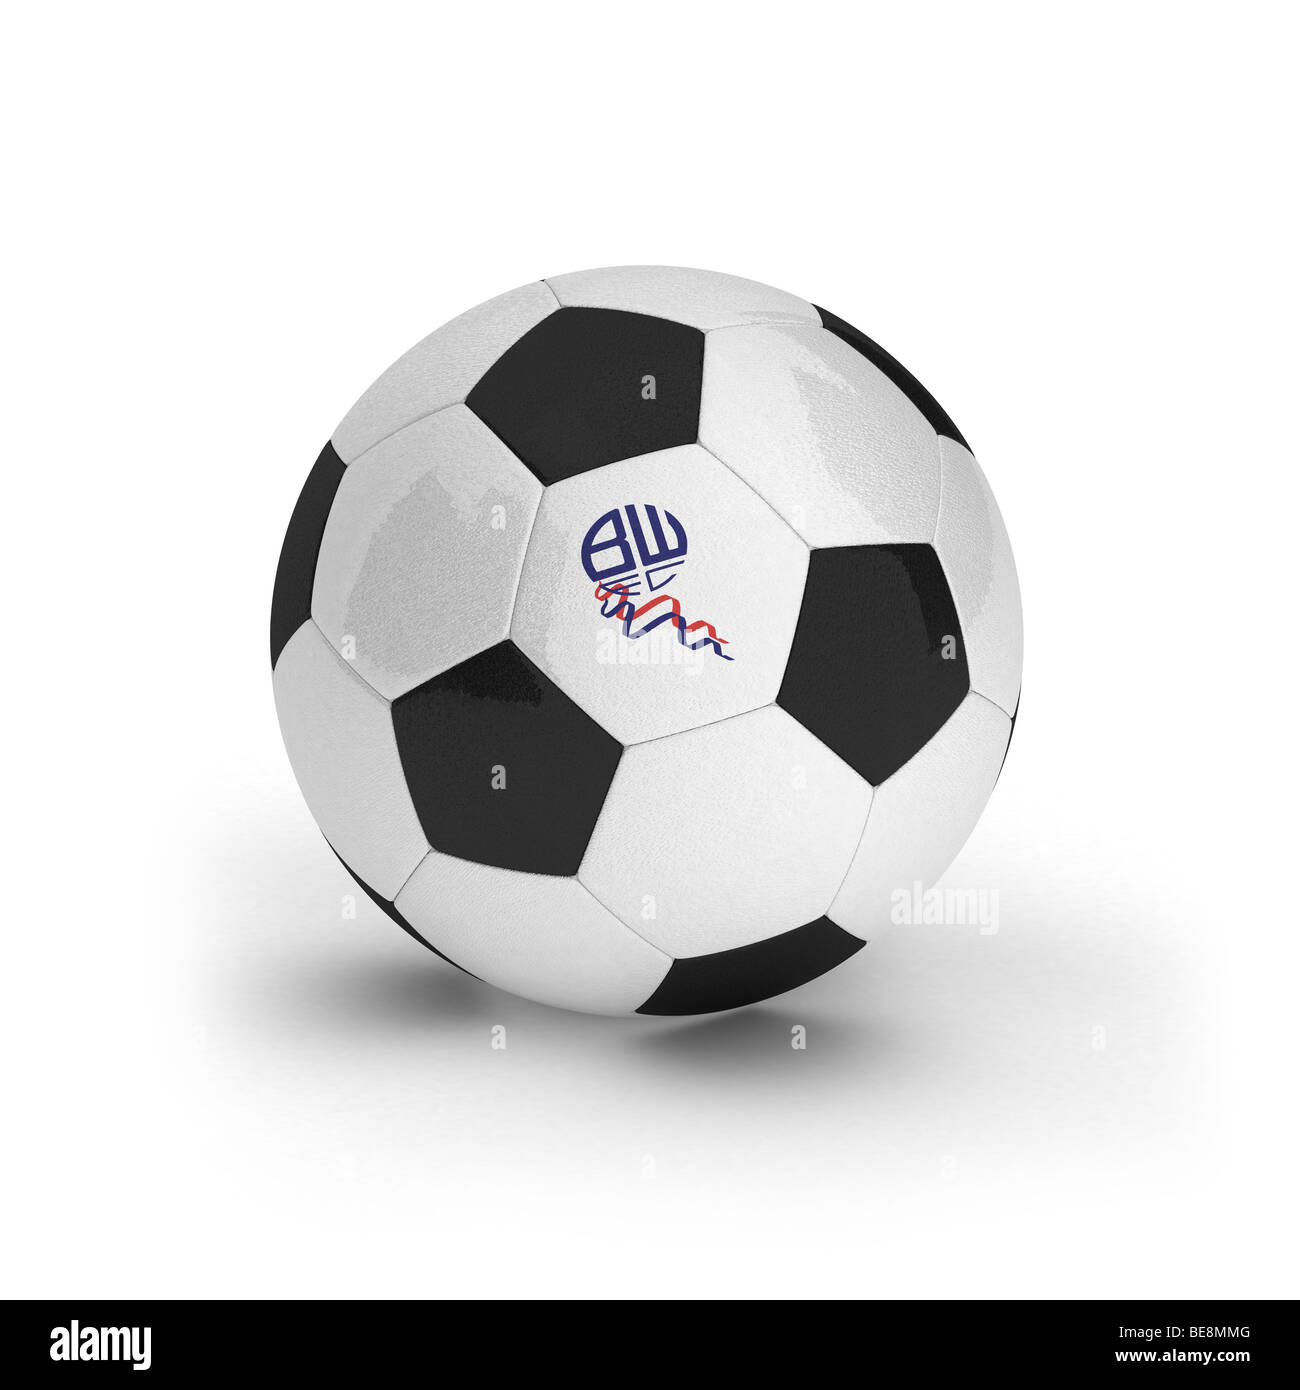 Bolton Wanderers Football Club emblème sur un ballon de foot Banque D'Images